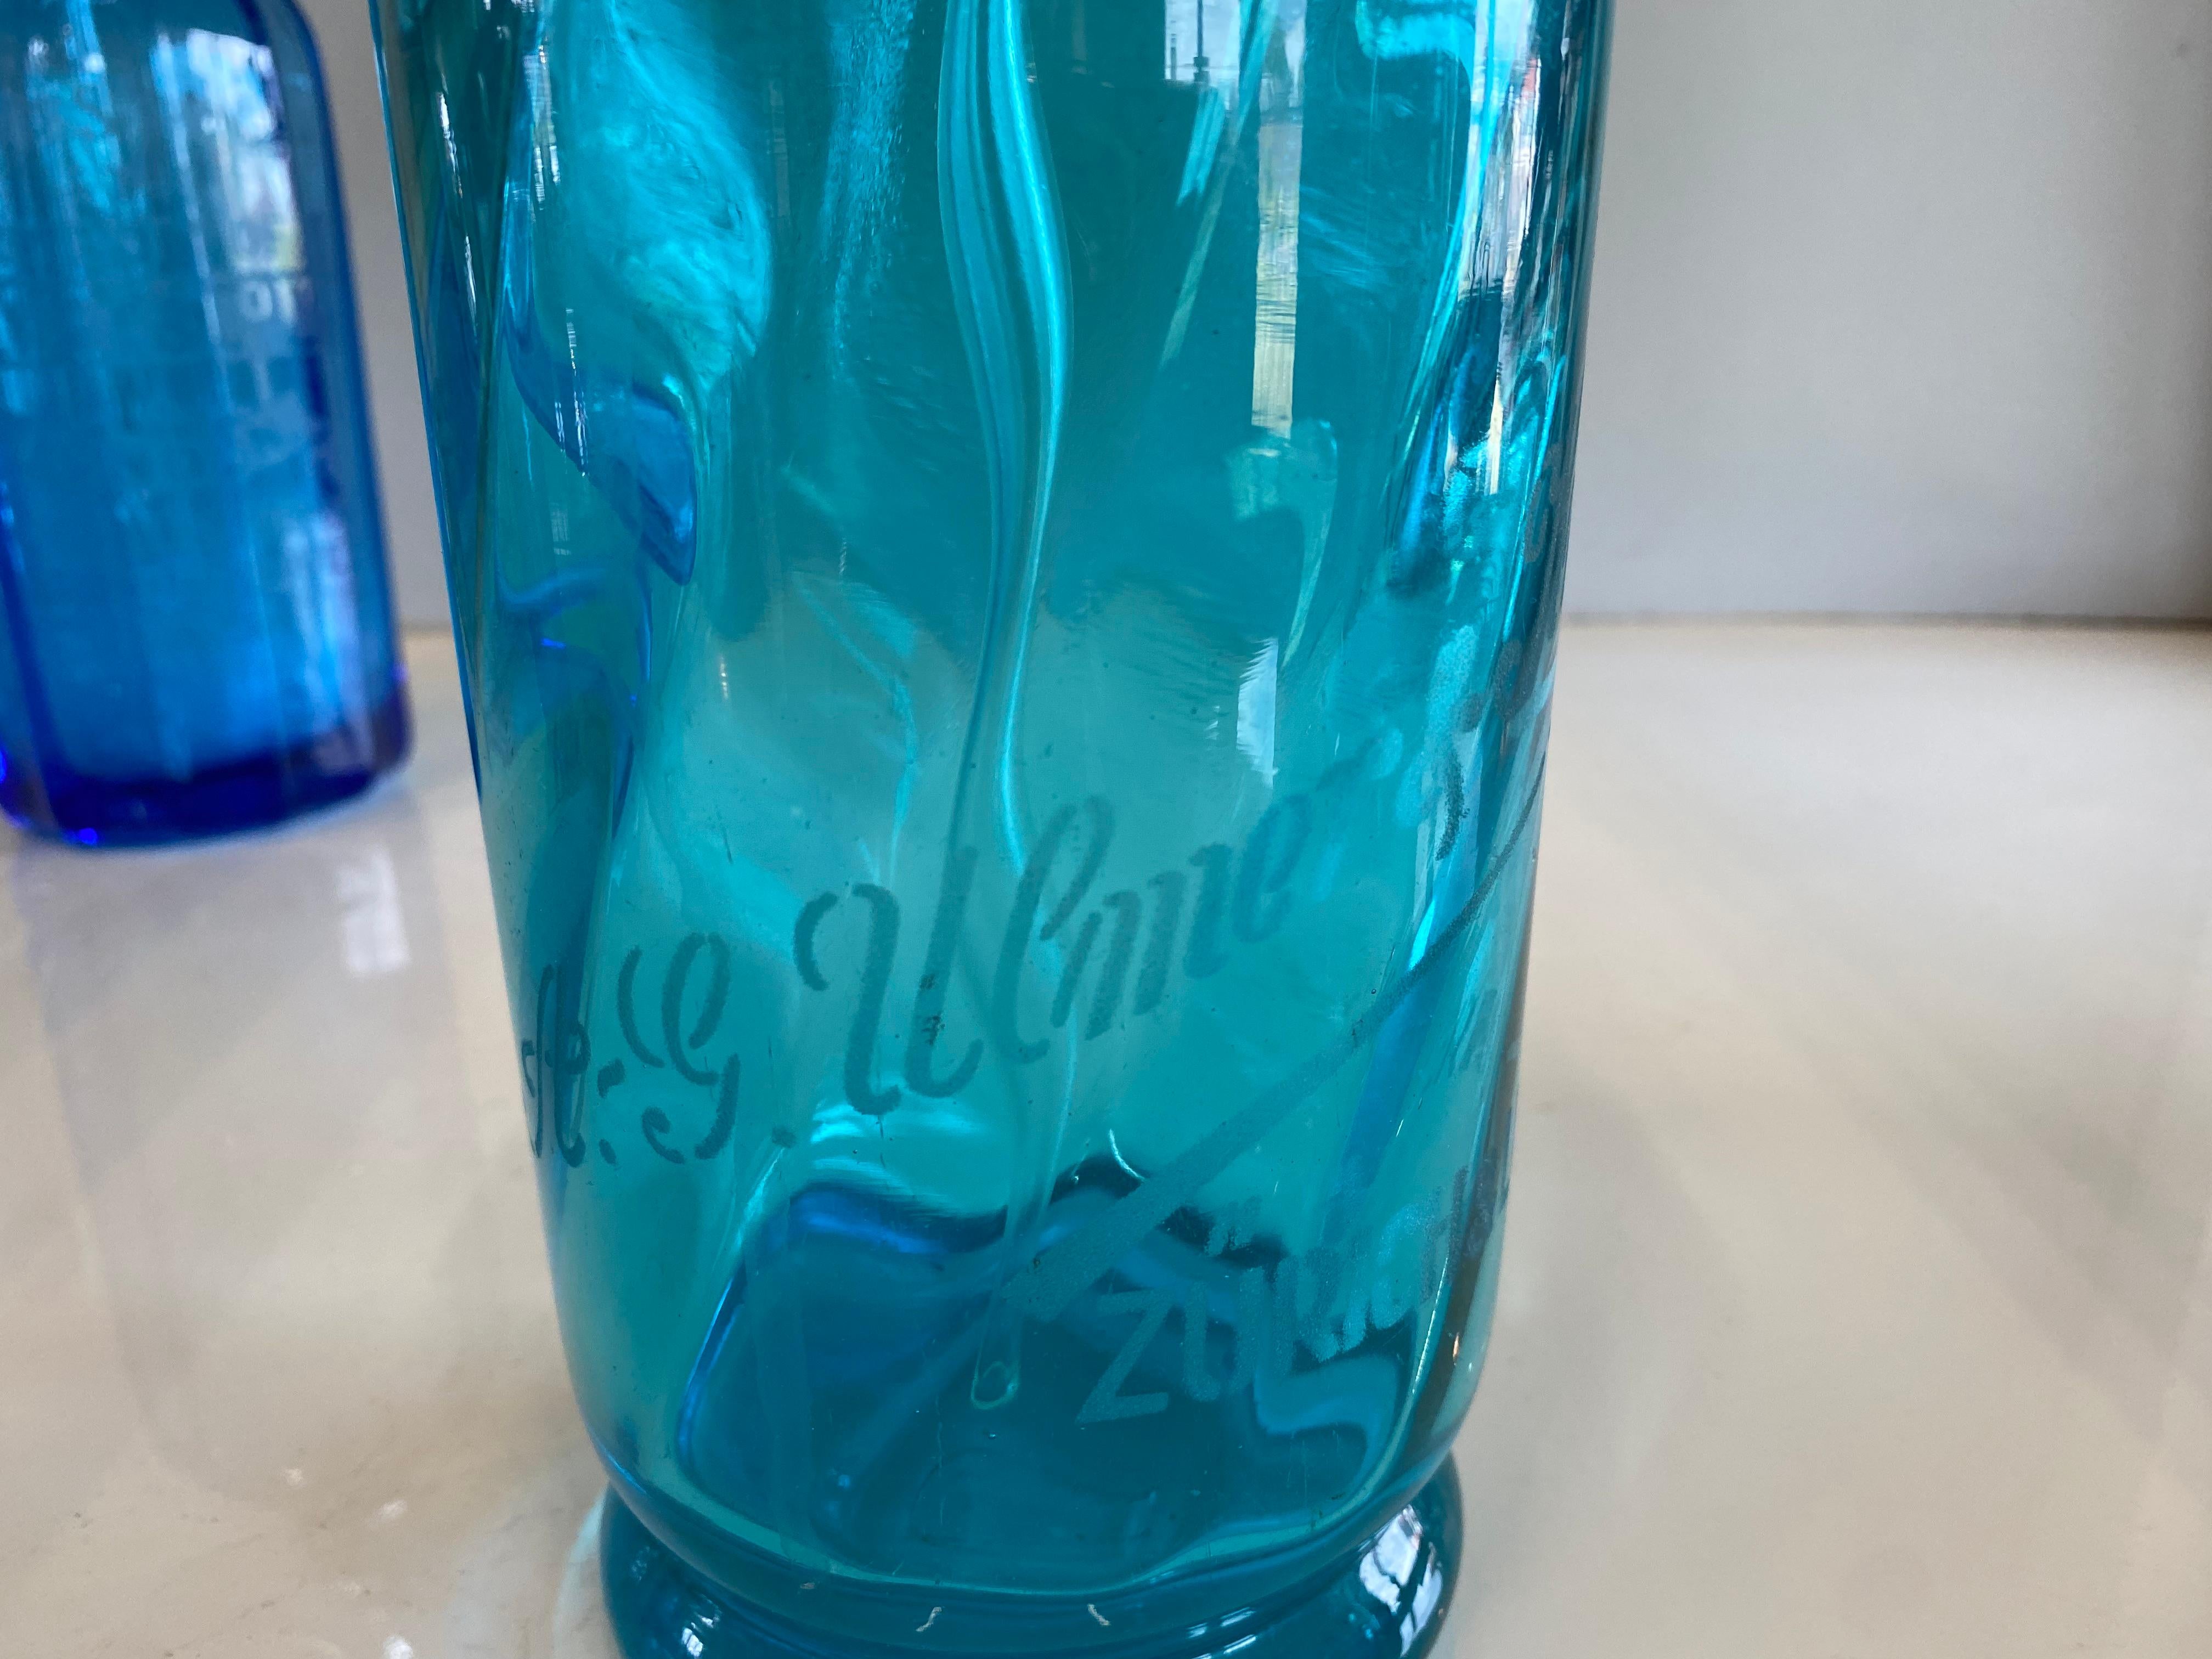 Seltzer-Soda-Seidenflaschen-Set im Jugendstil, blaues Glas, türkisfarbenes Glas im Angebot 10